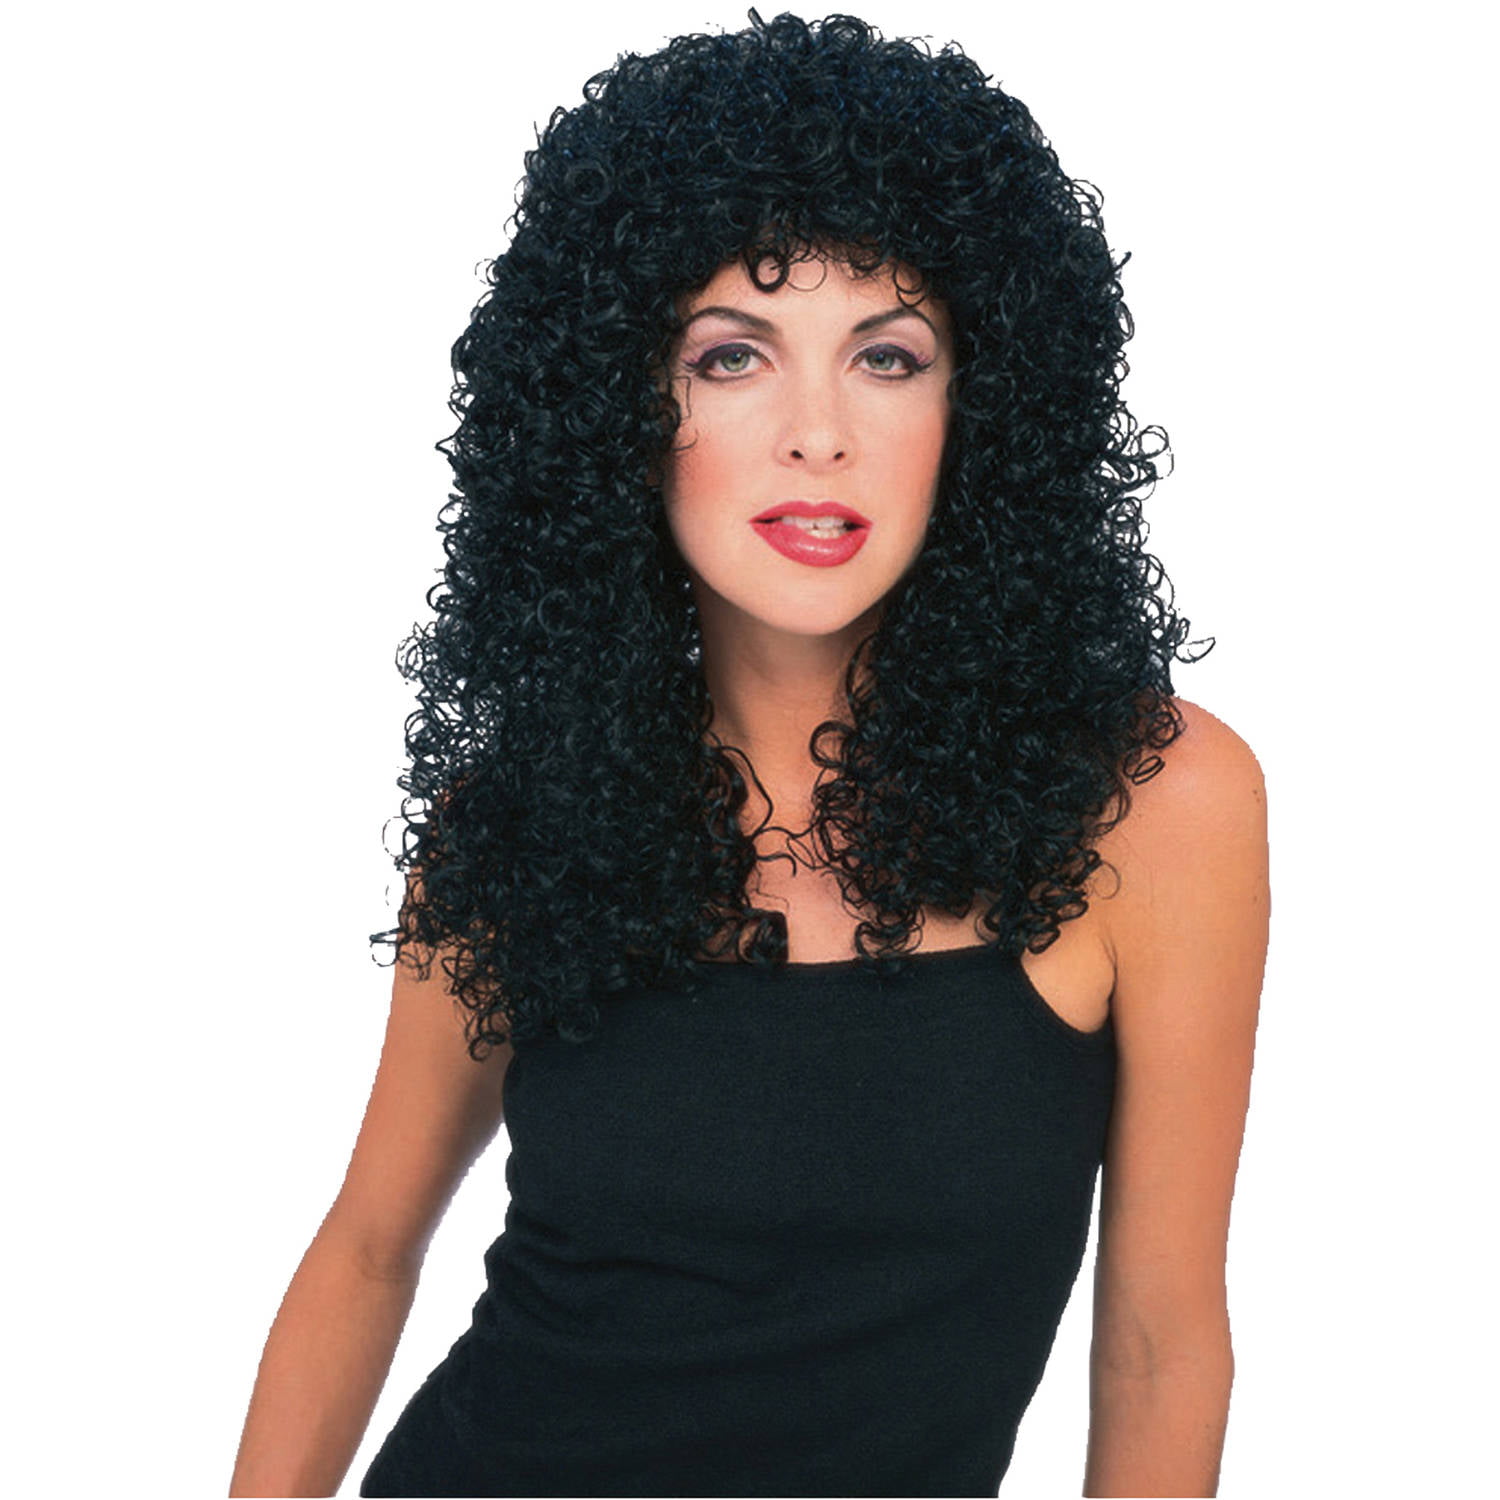 Curly Extra Long Wig Adult Halloween Accessory - Walmart.com